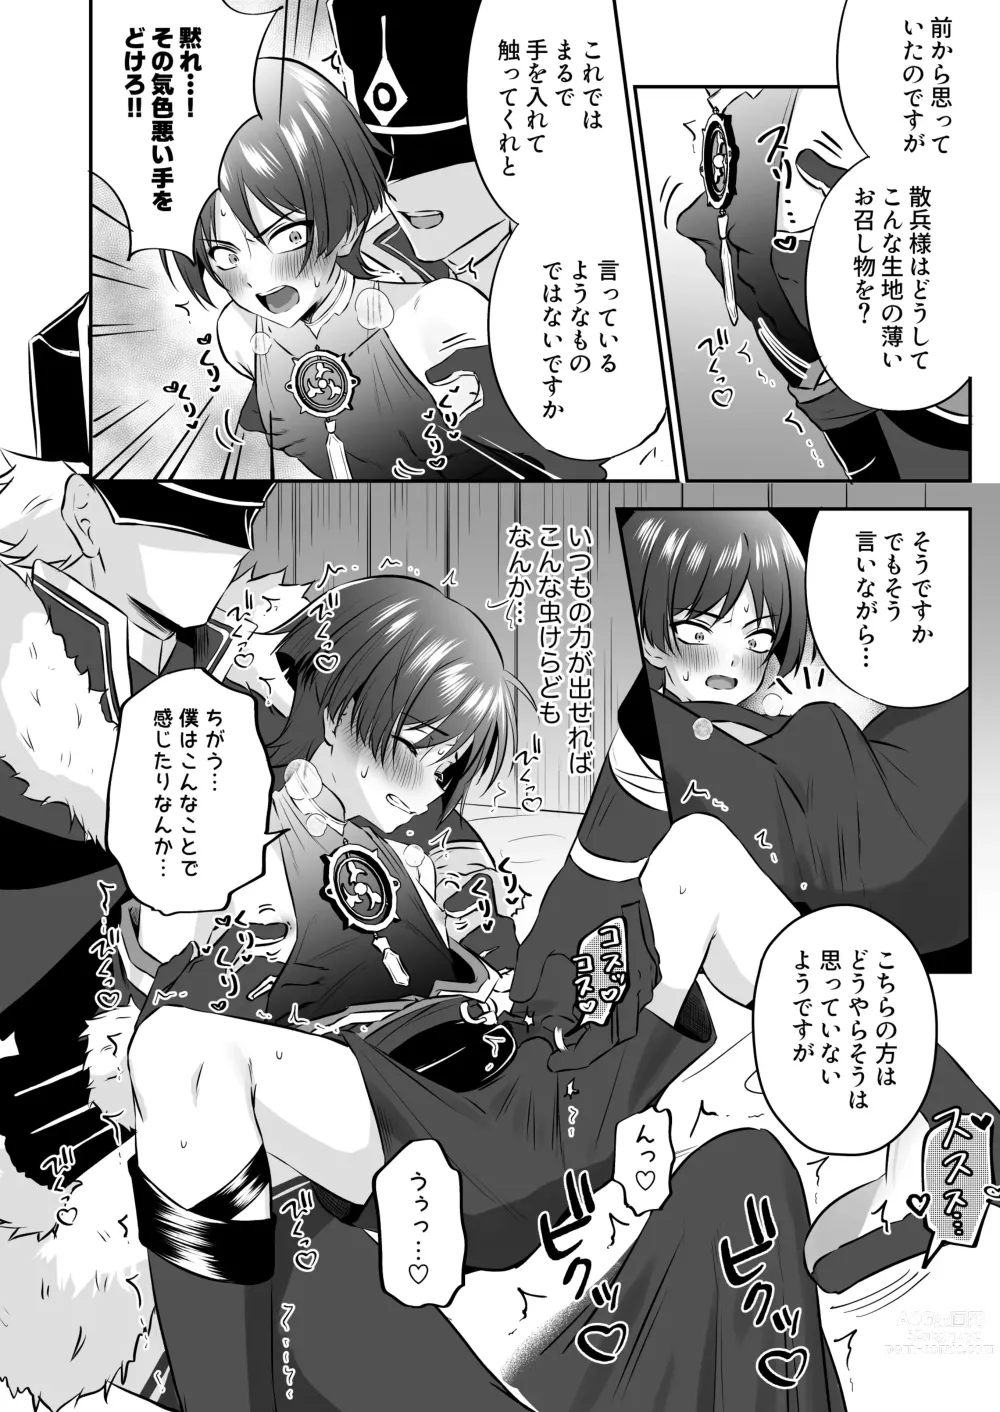 Page 6 of doujinshi 【3月新刊】散兵様が薬盛られたからってモブファデュイたちに好き勝手されるわけないだろ